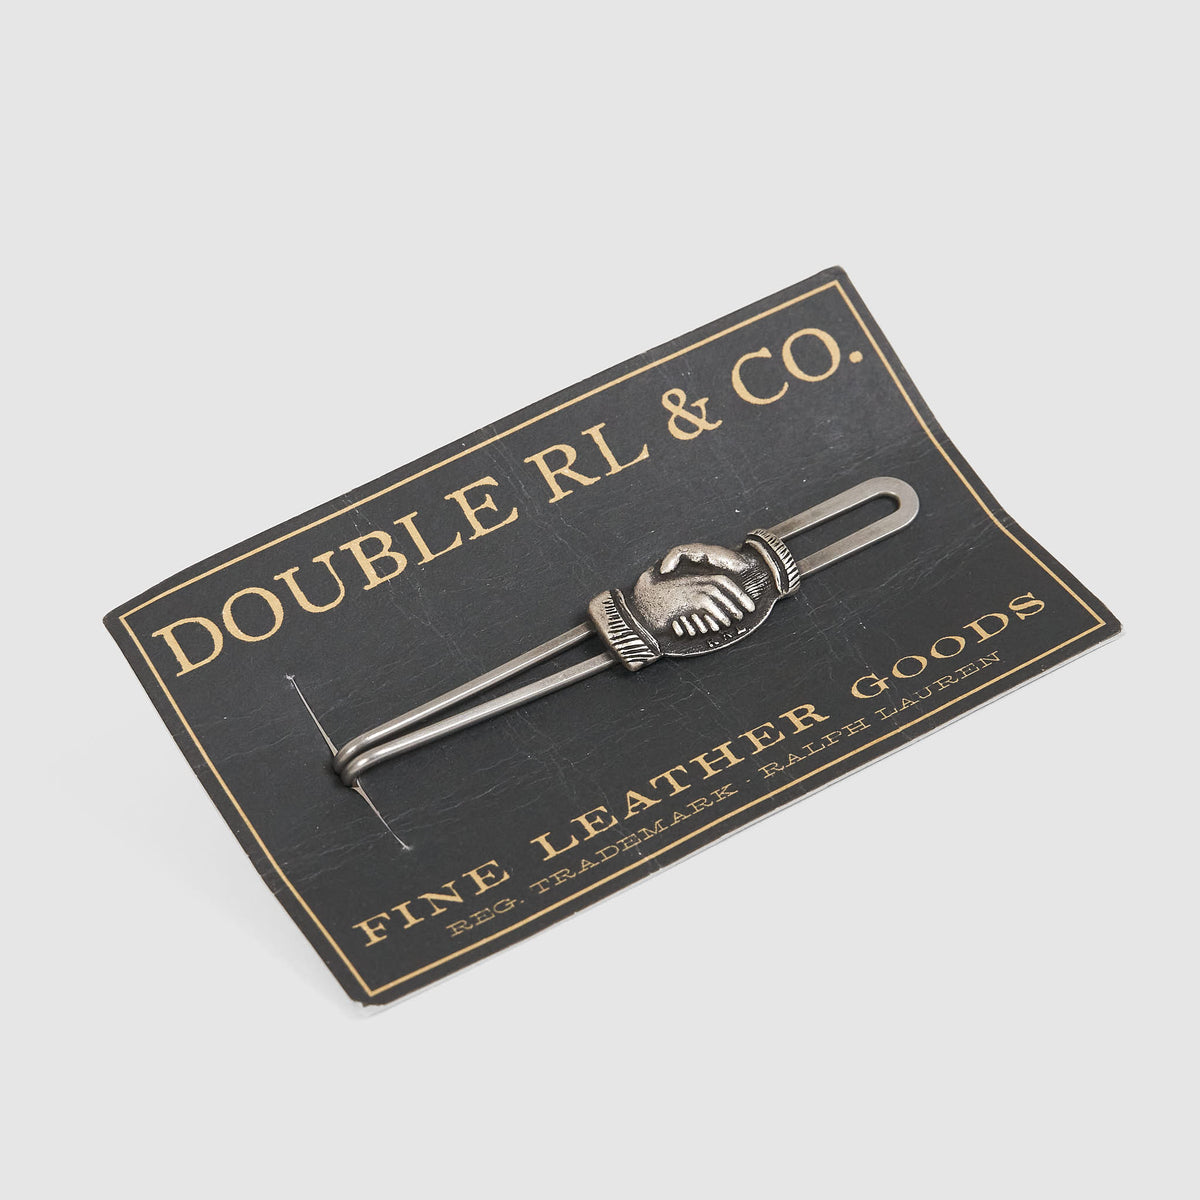 Double RL Silver Plate Handshake Tie Clip